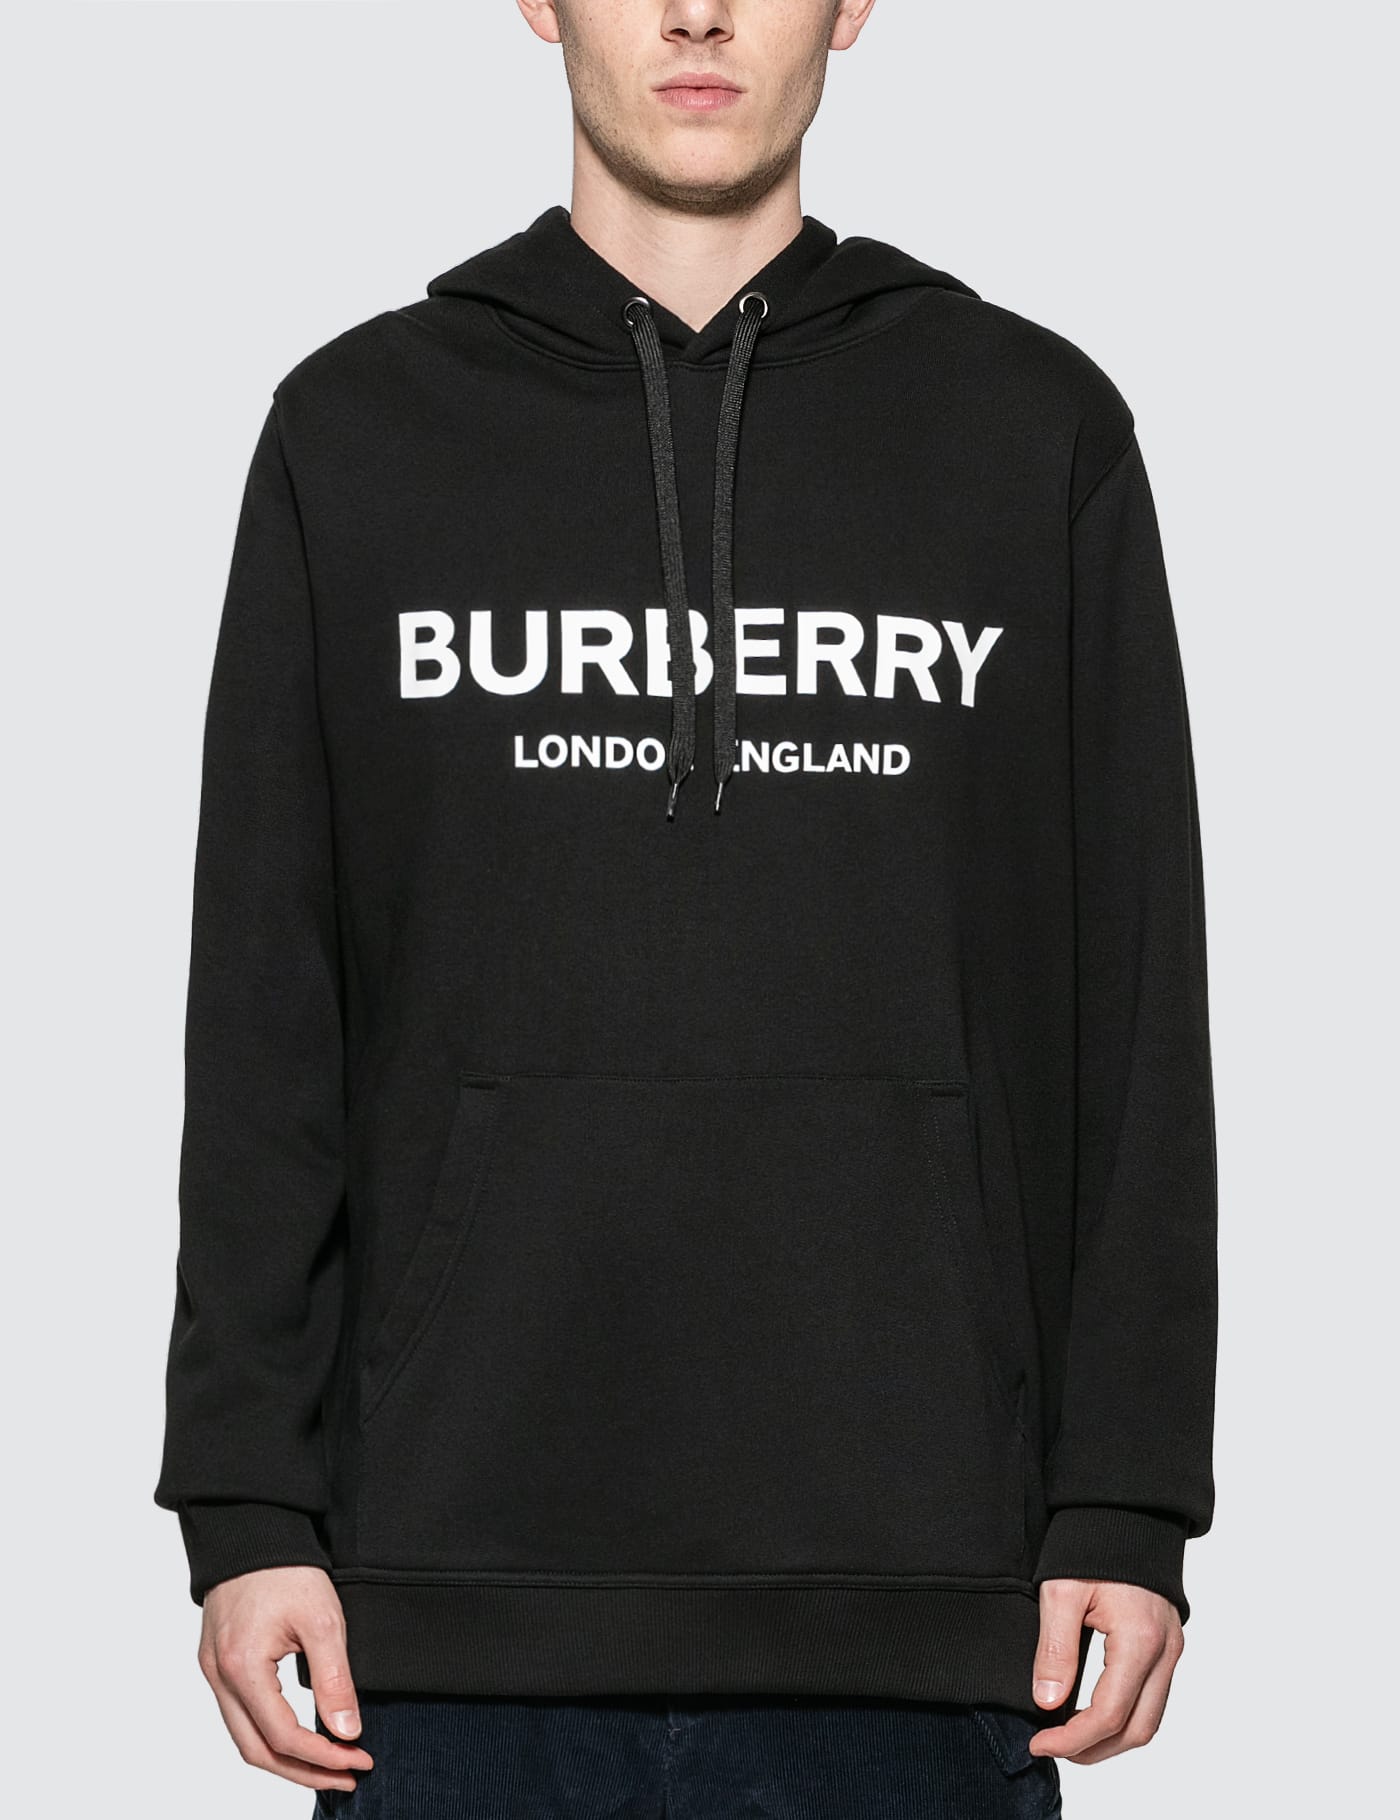 burberry hoodie sizing